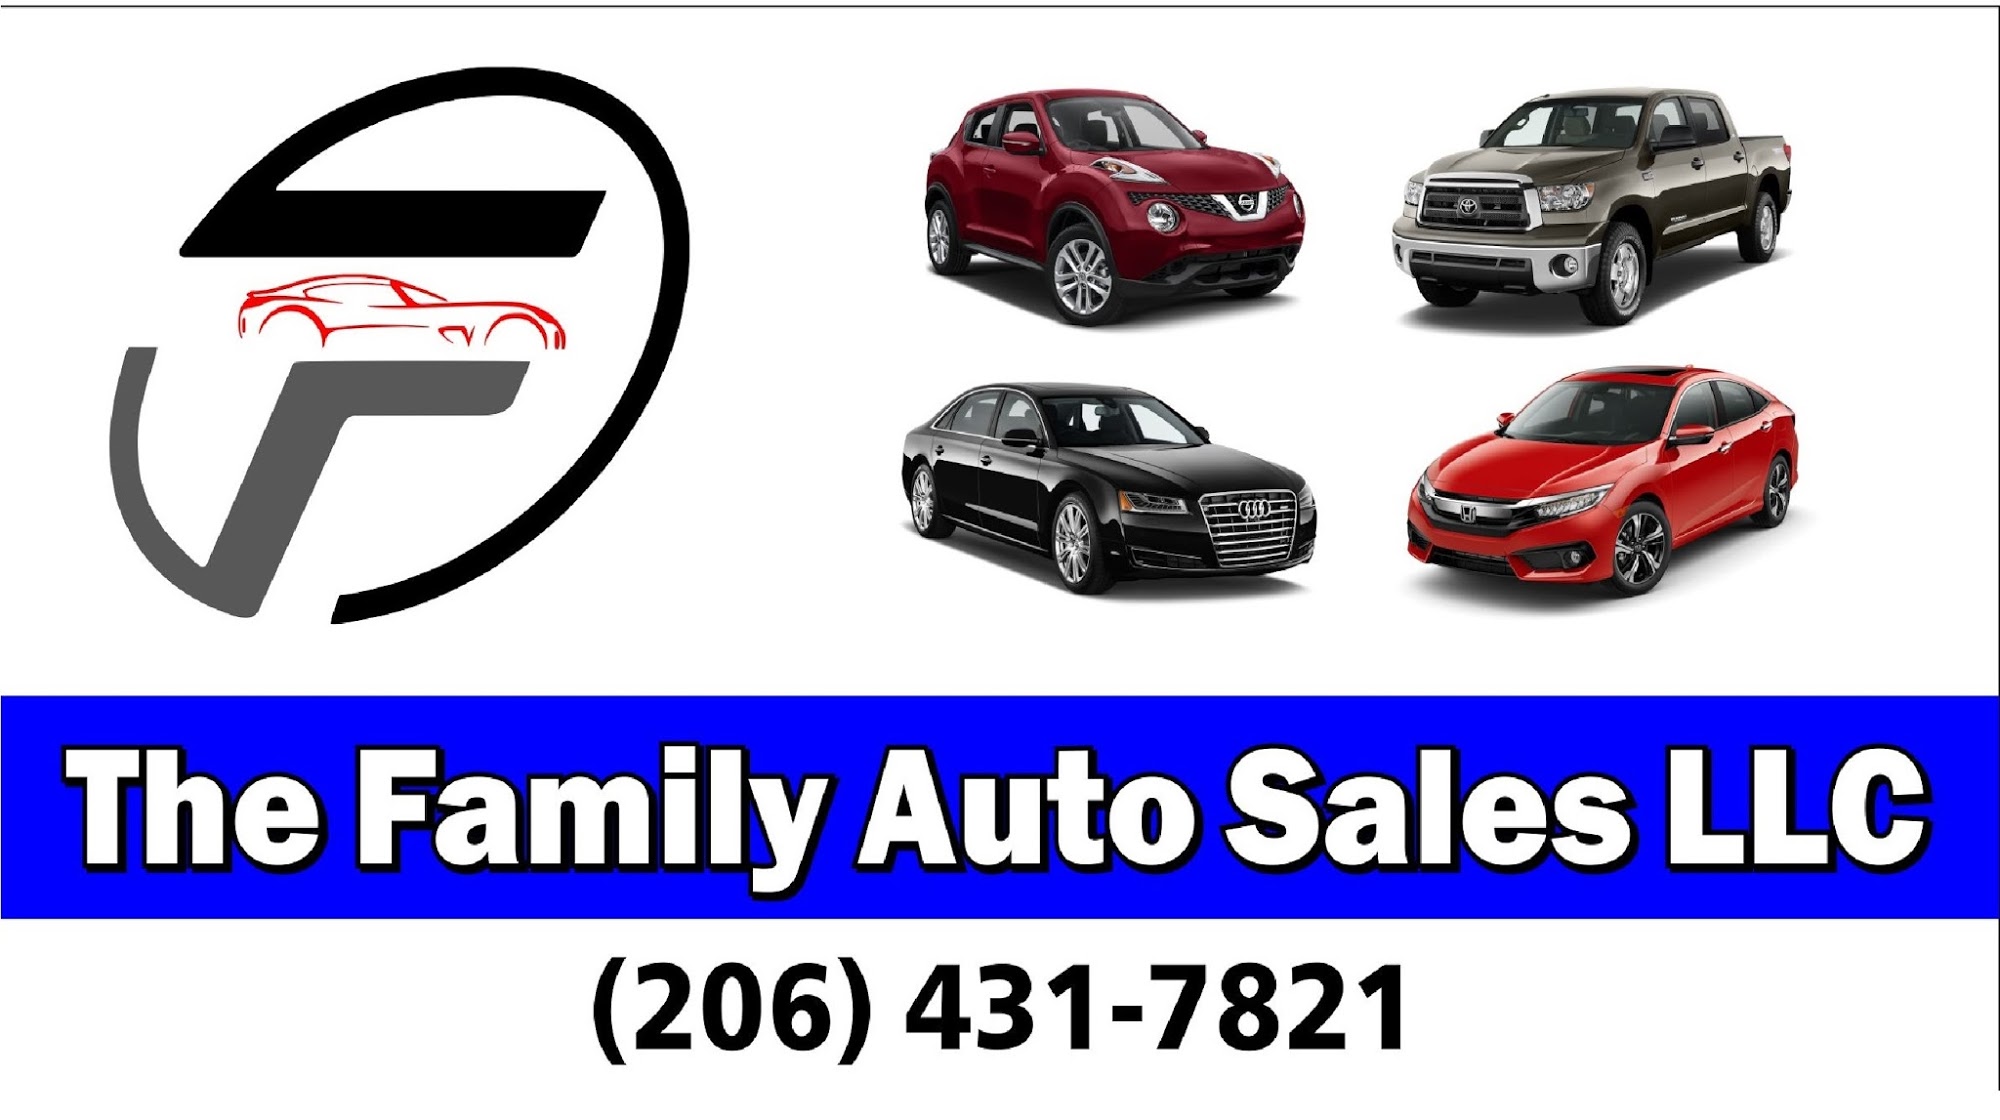 The Family Auto Sales LLC